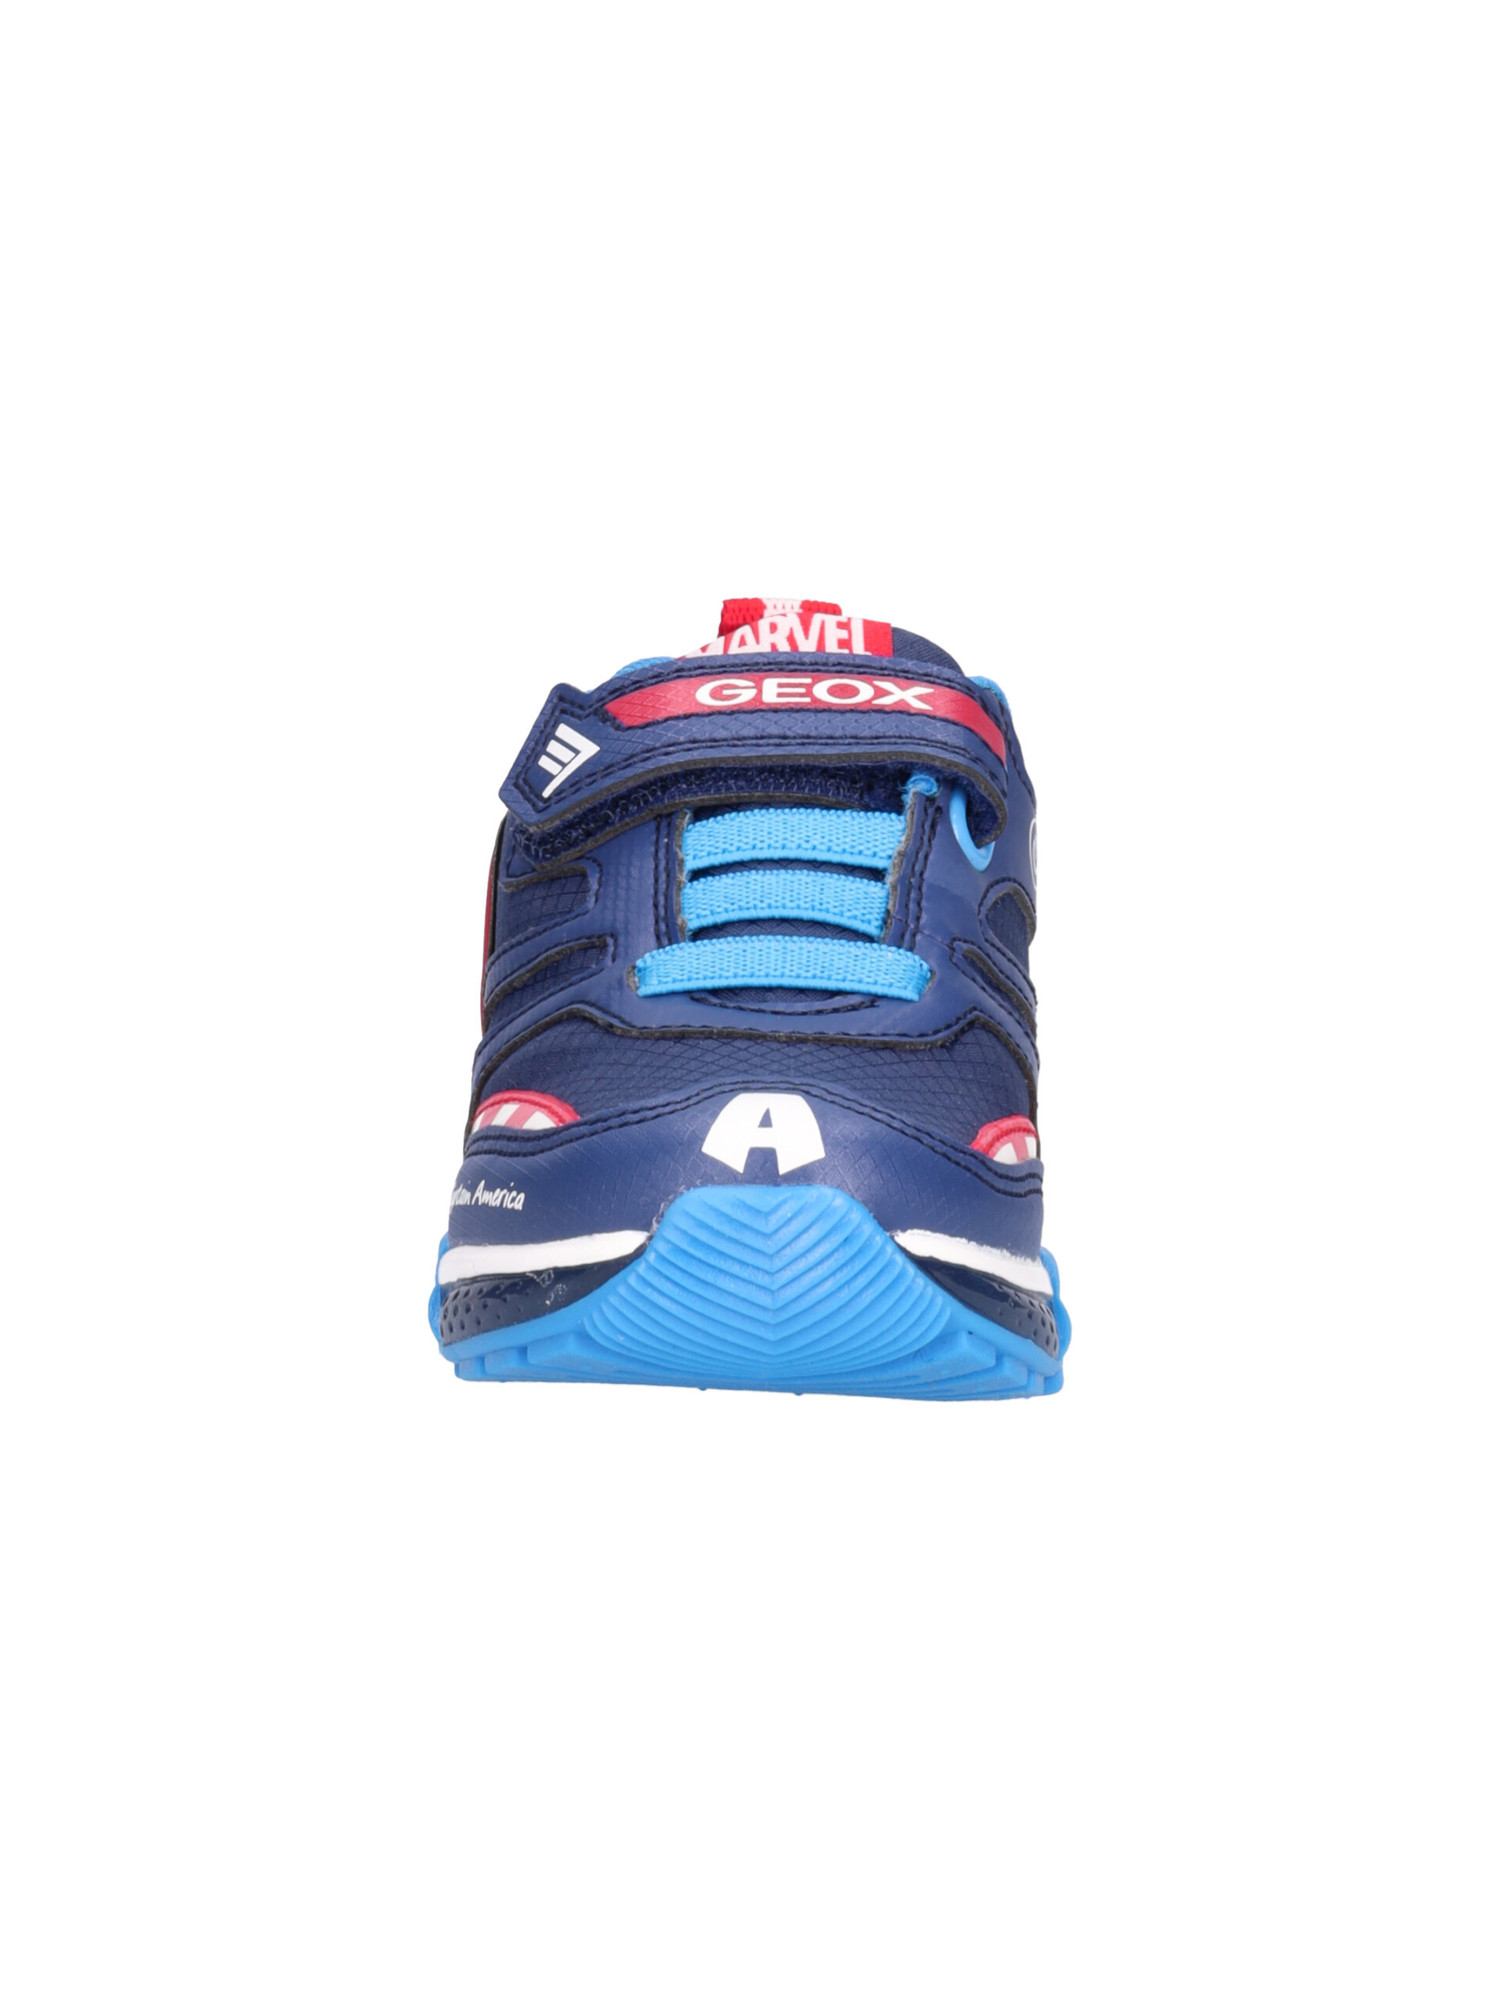 sneaker-captain-america-by-geox-da-bambino-blu-cb5eac